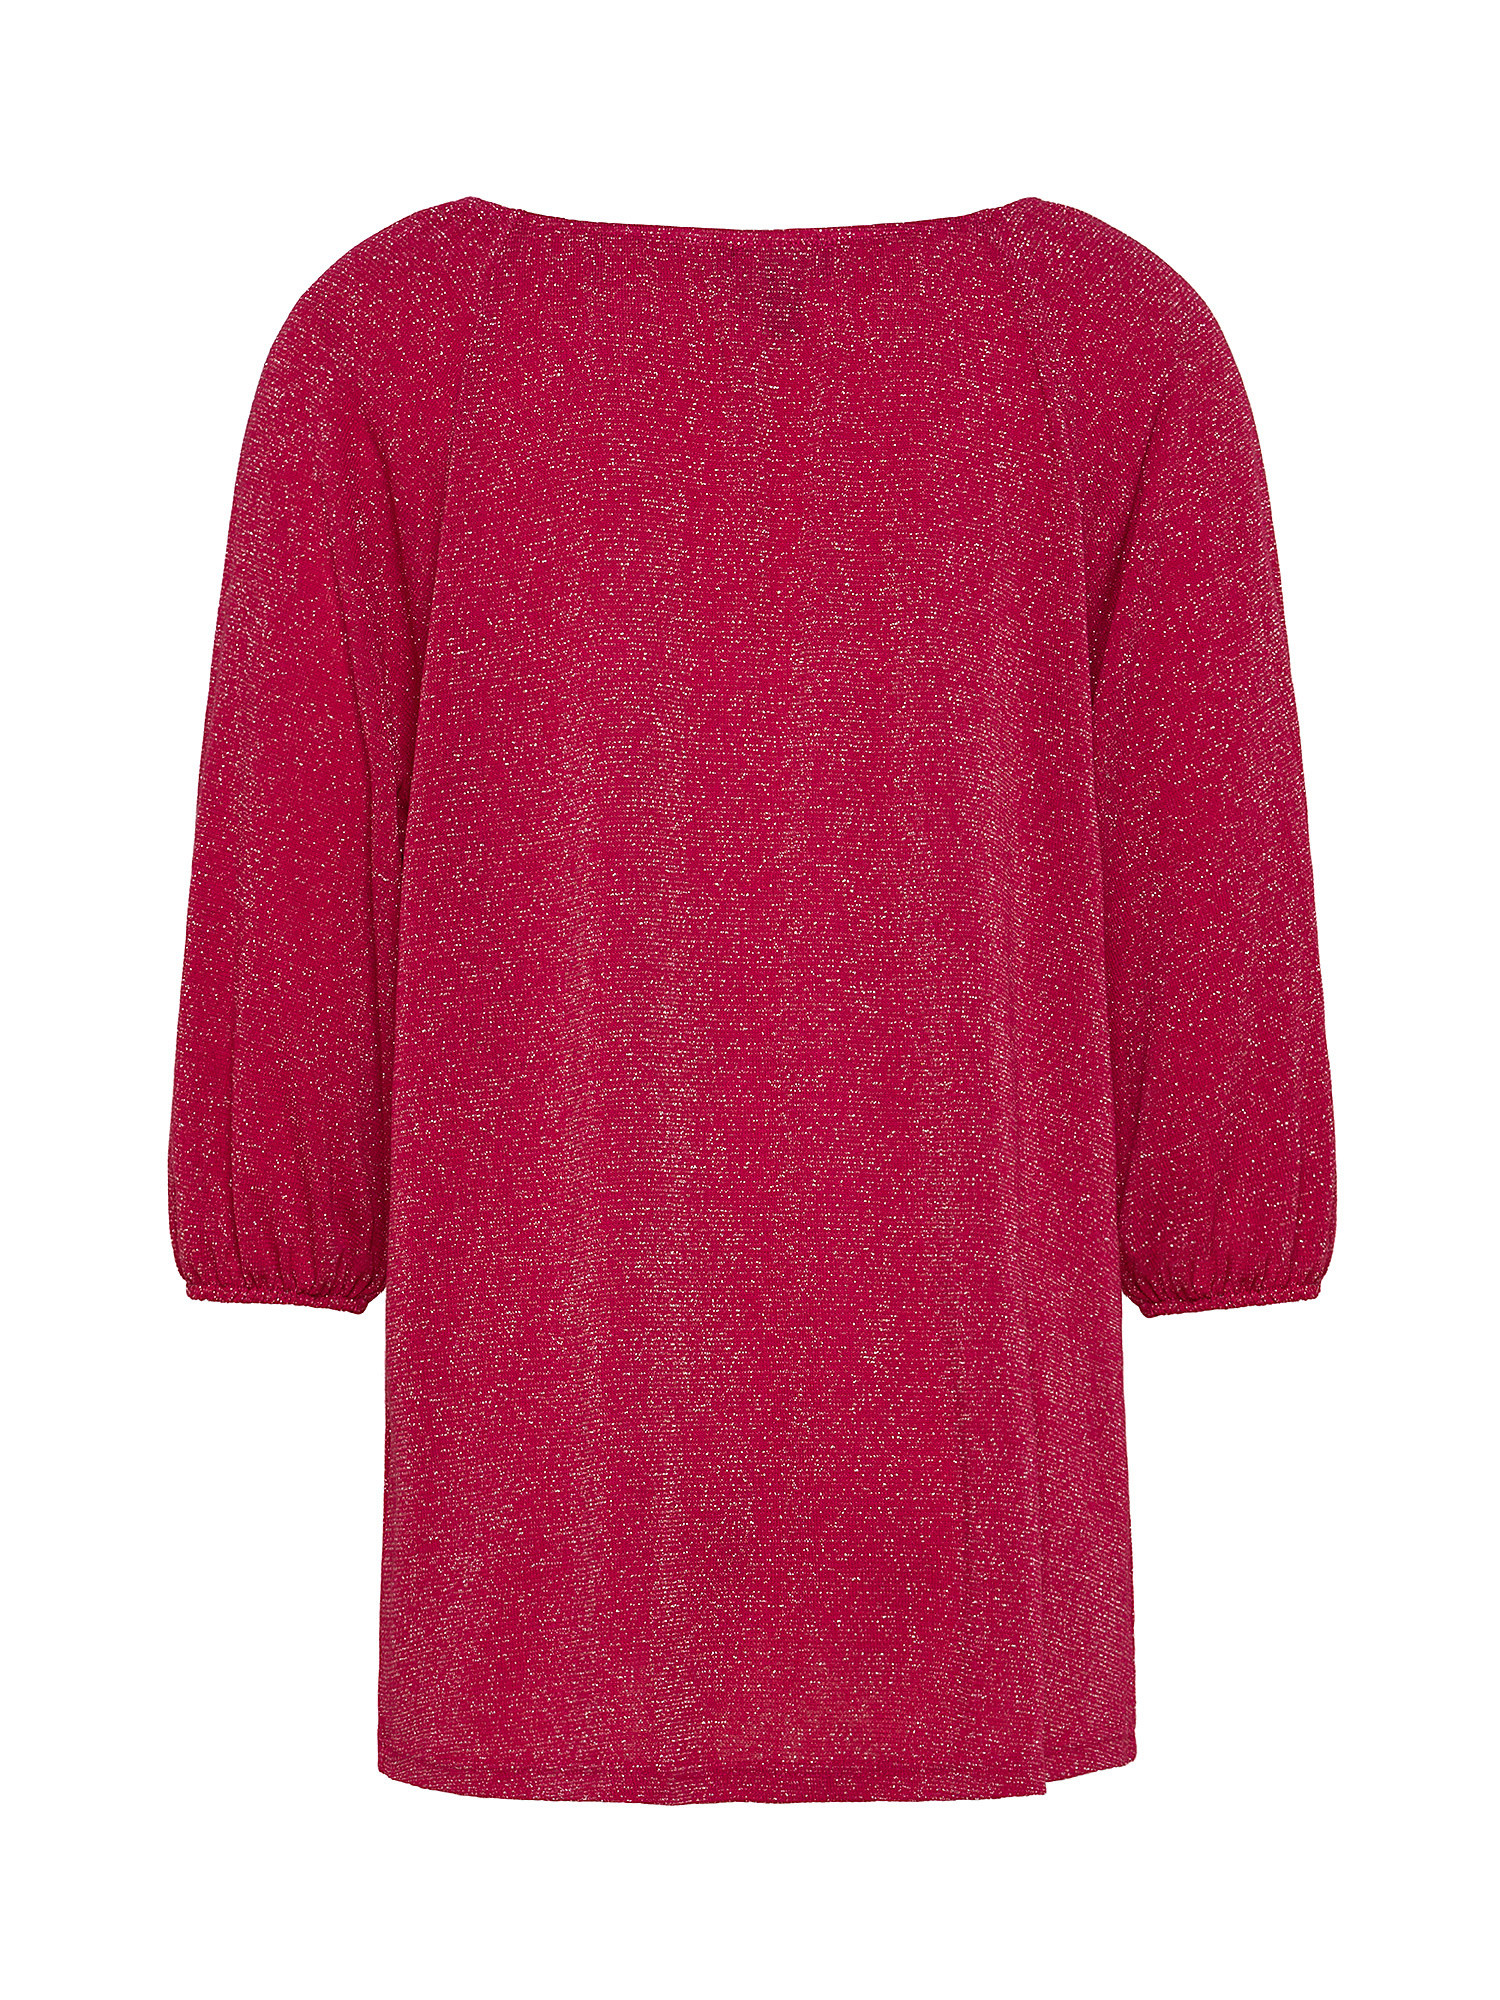 Raglan sleeve T-shirt, Pink Fuchsia, large image number 1